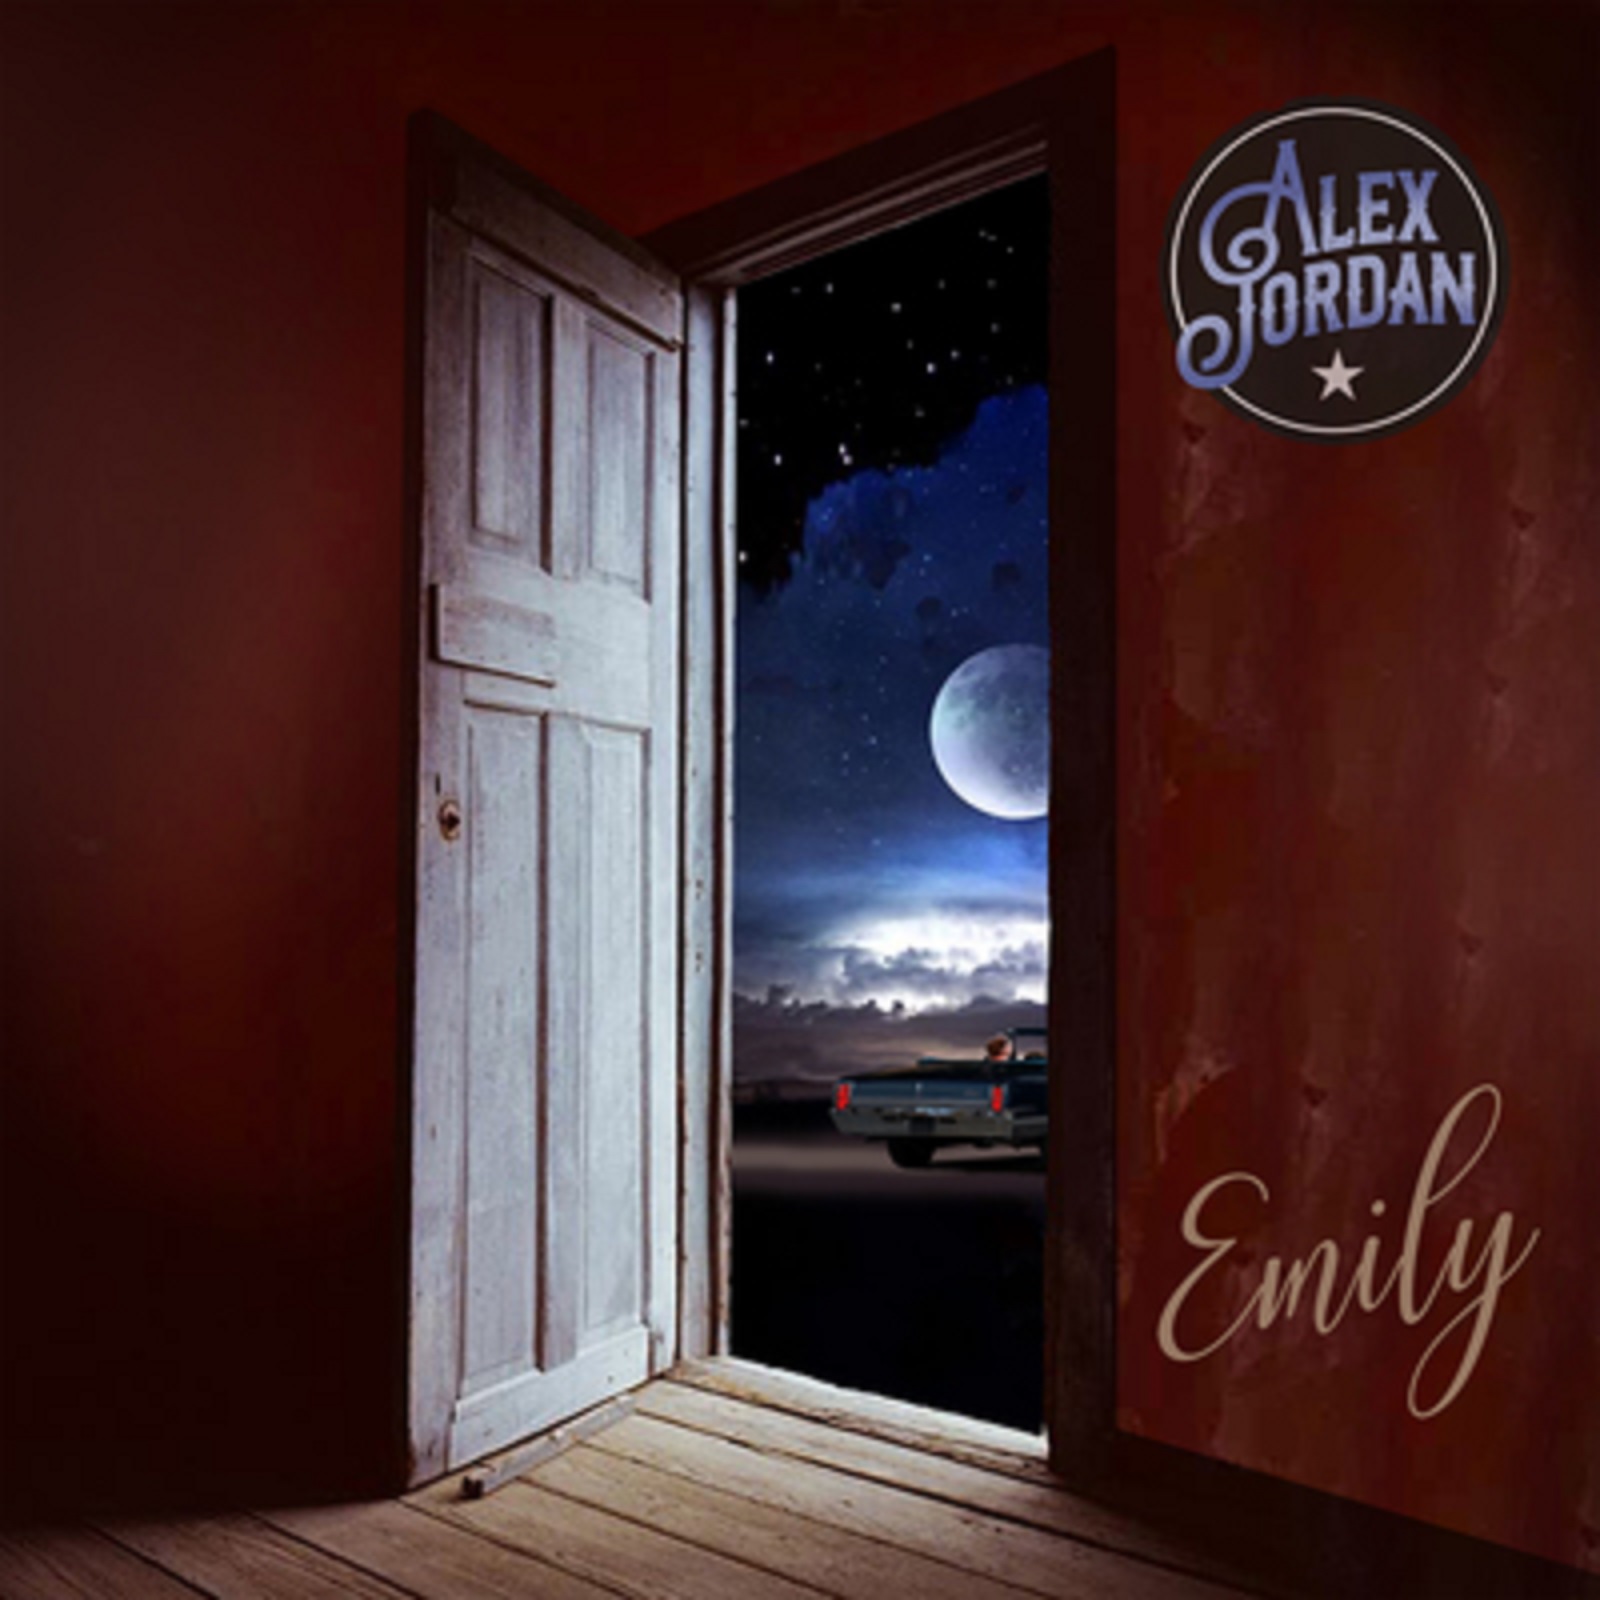 Produced by Steve Berlin of Los Lobos, "Emily" finds Alex Jordan getting bluesy